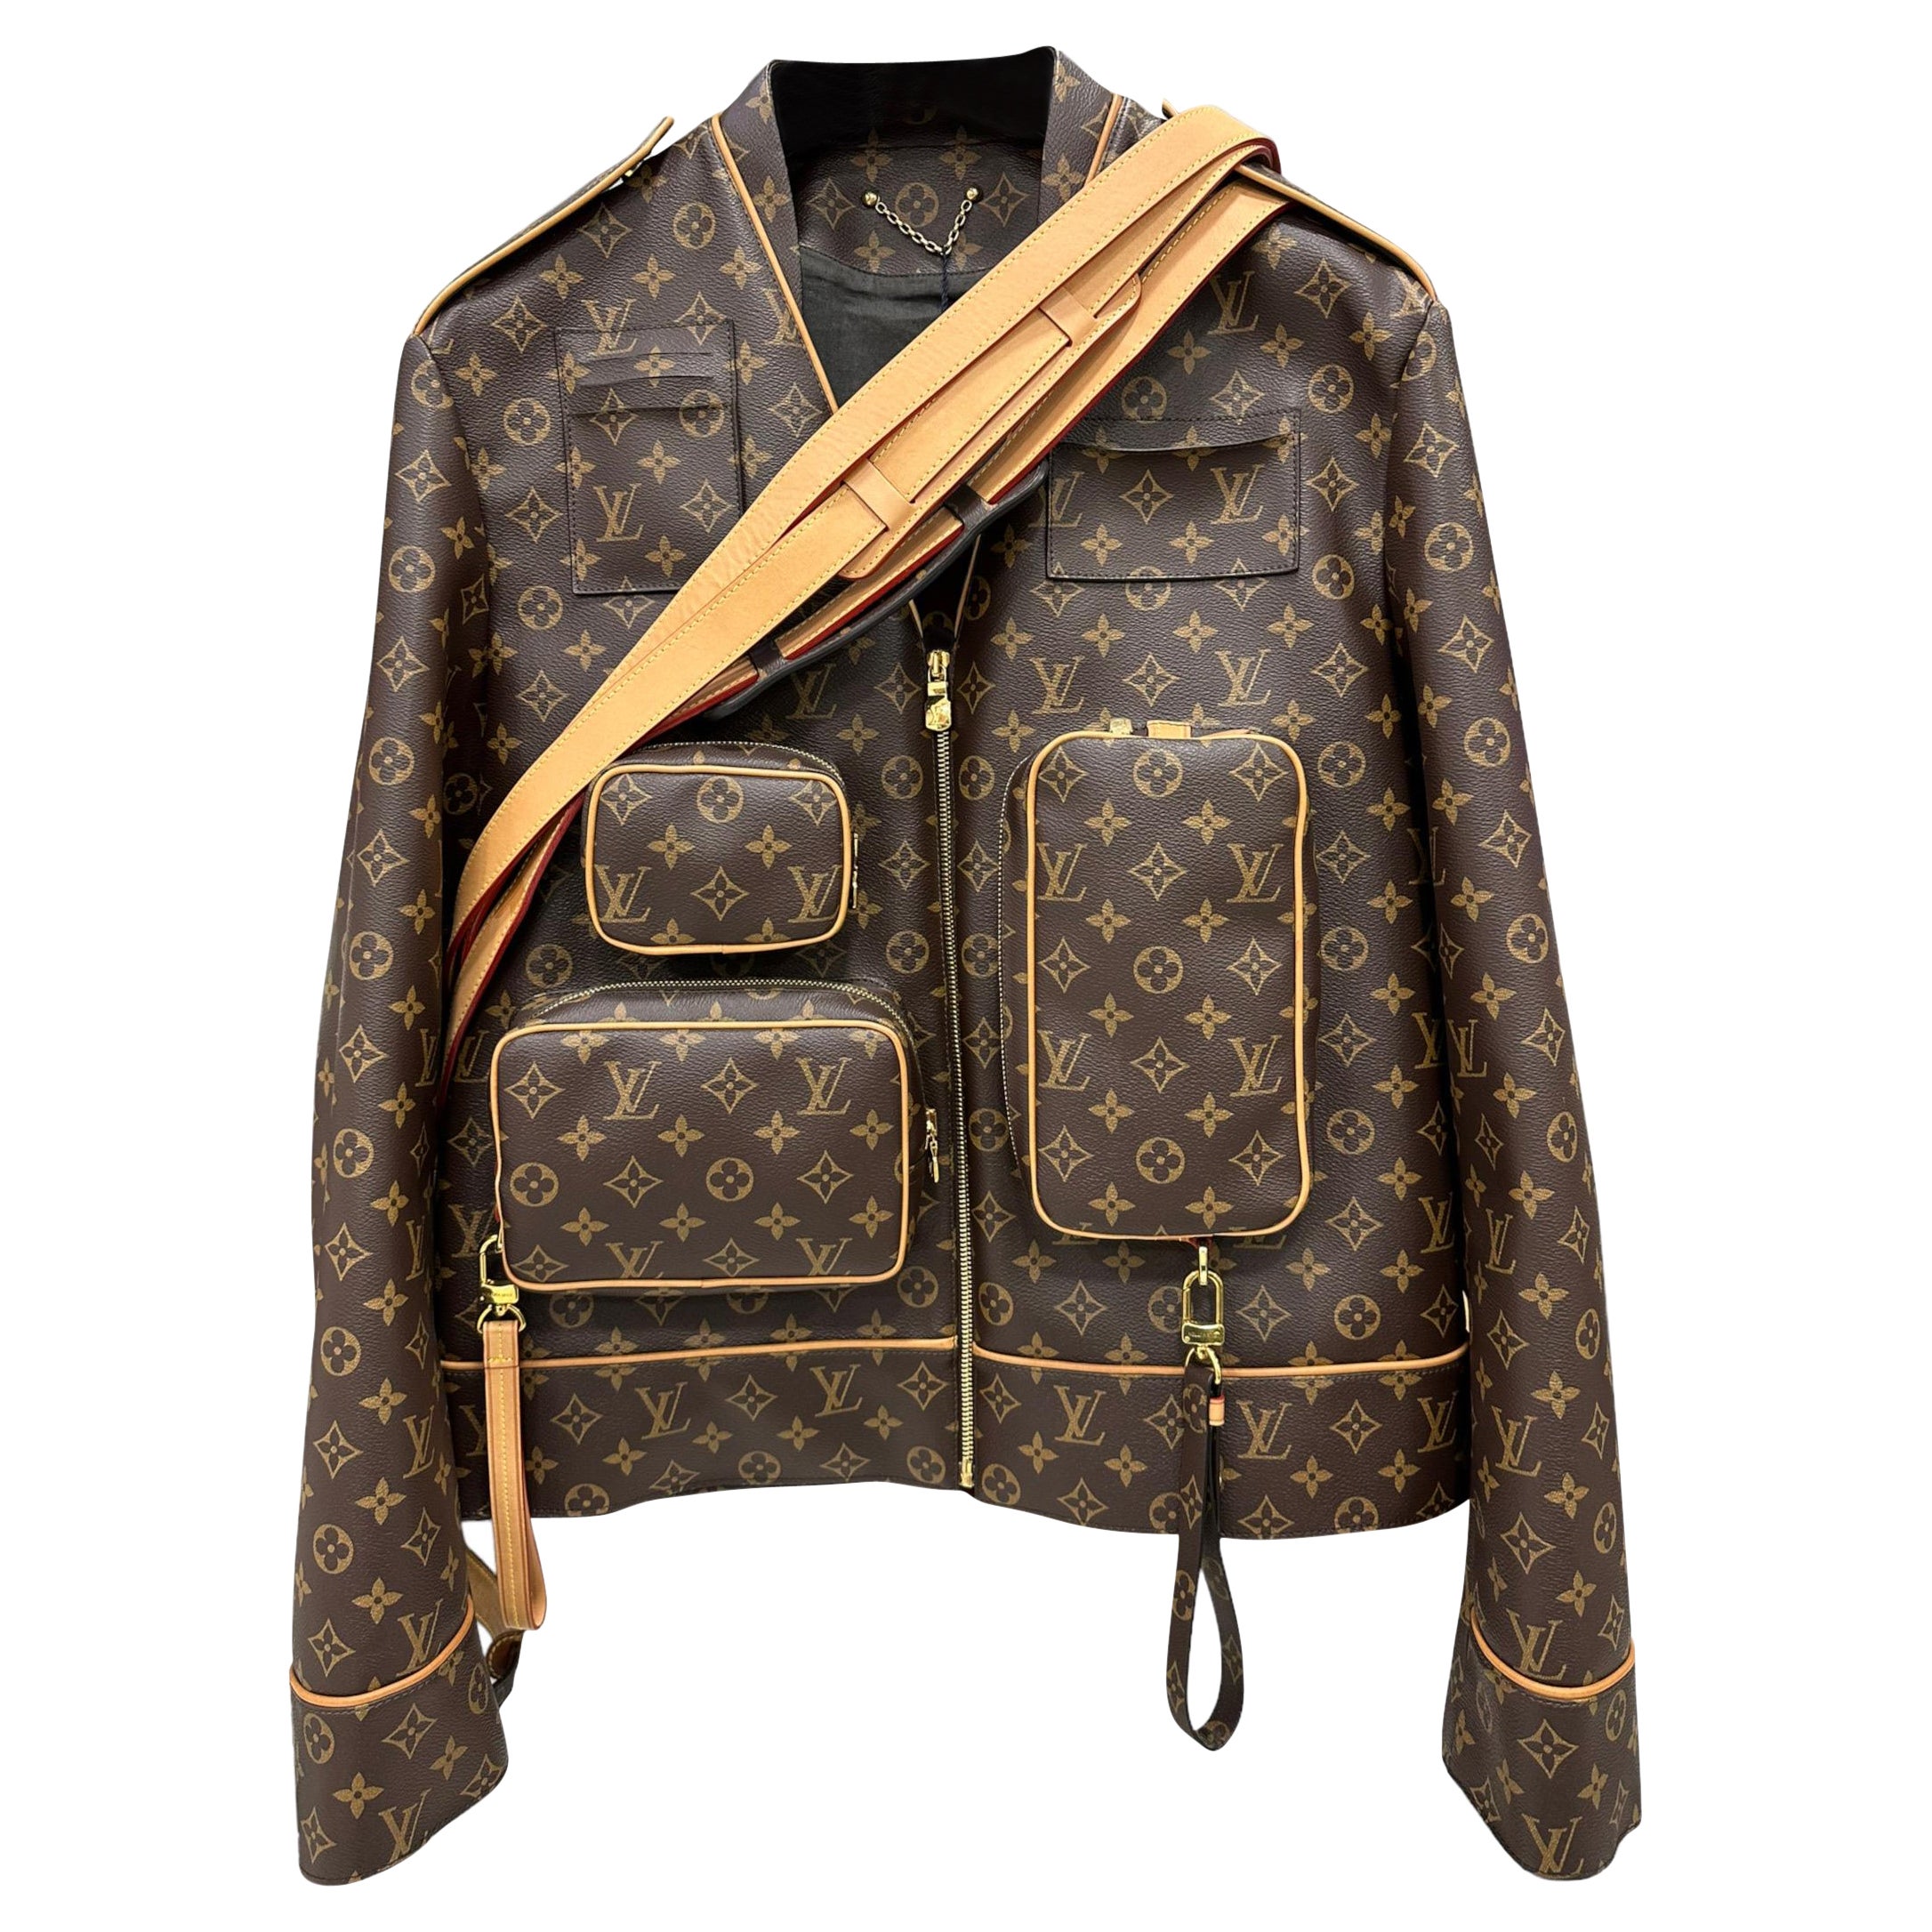 2019 Louis Vuitton Monogram Leather Men's Jacket Limited Edition For Sale